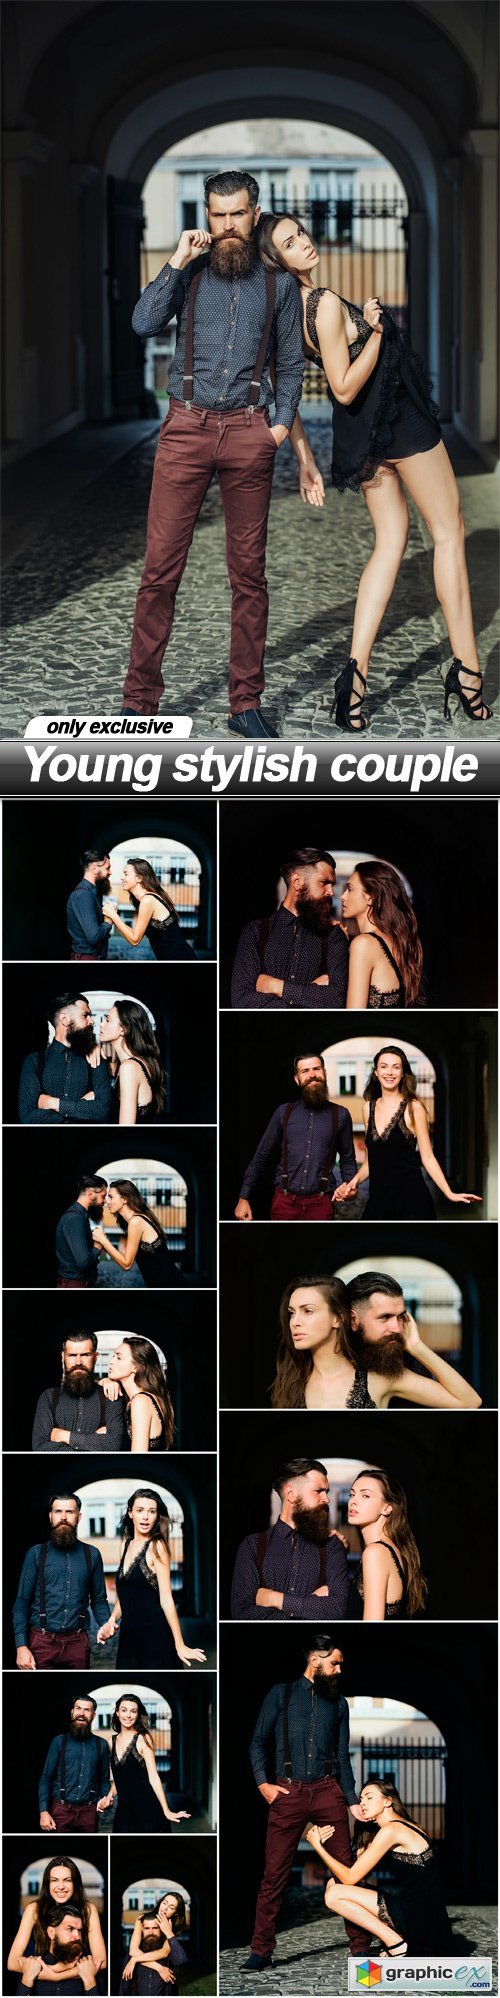 Young stylish couple - 14 UHQ JPEG